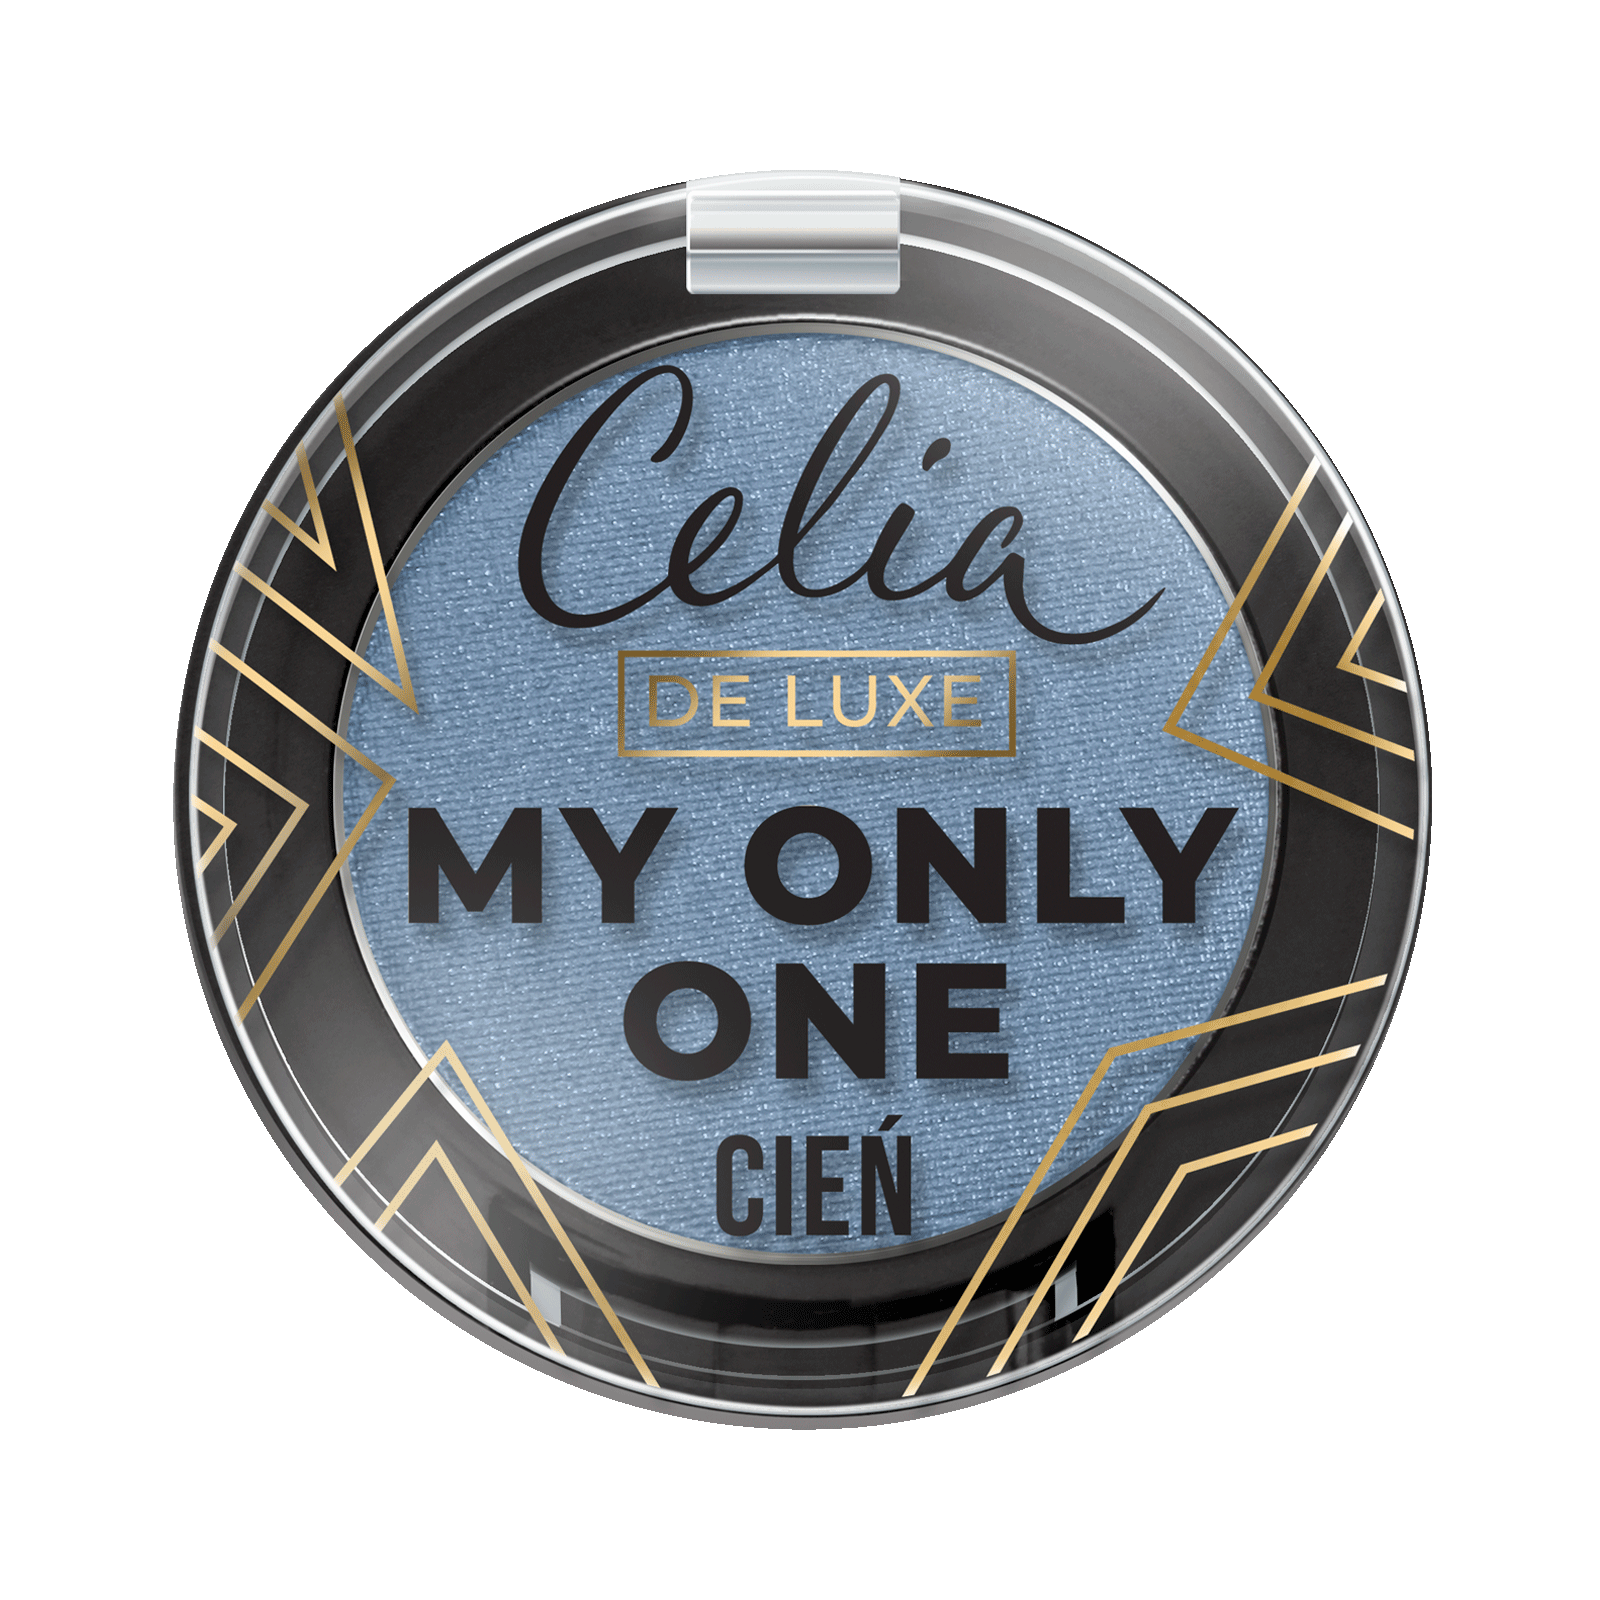 Атласные тени для век 8 Celia My Only One, 3 гр фото